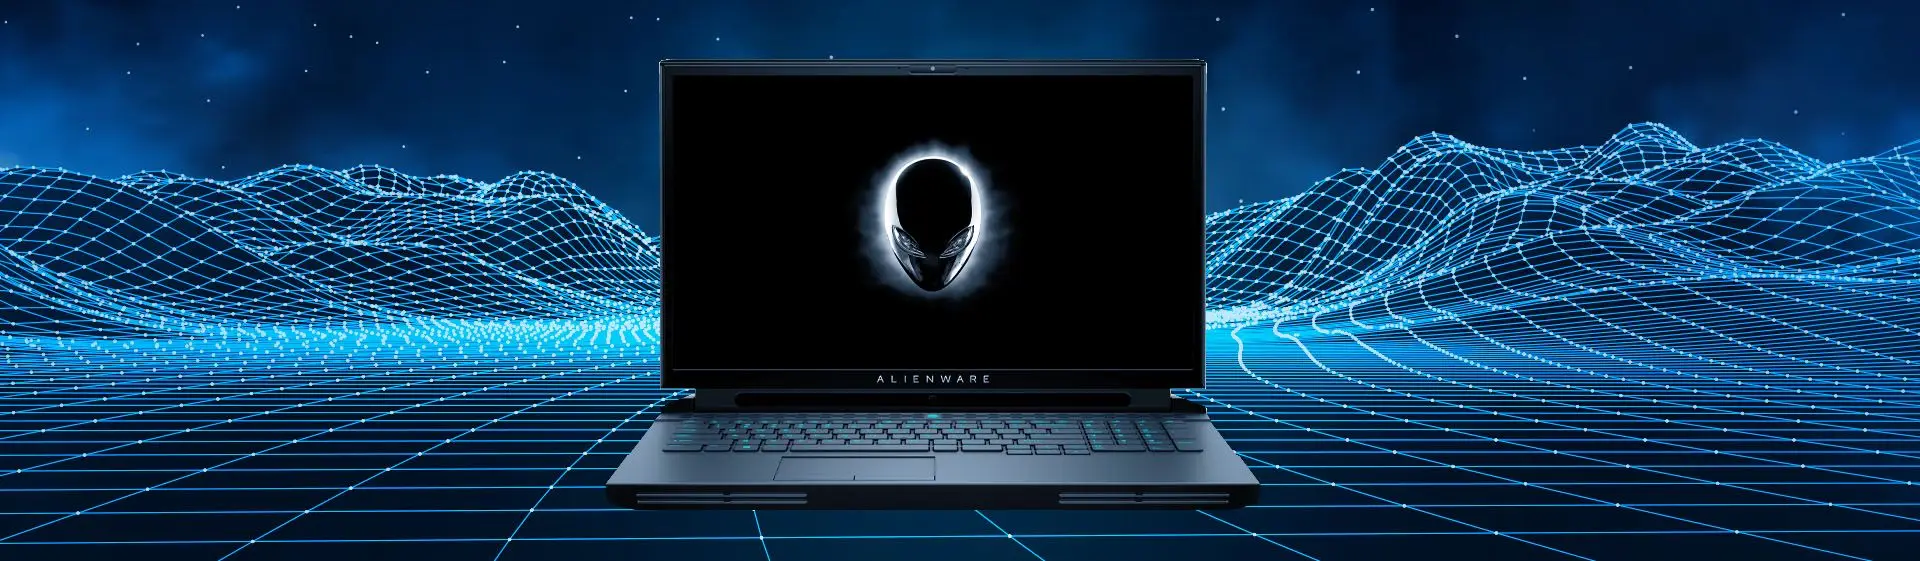 Capa do post: Notebook Alienware vale a pena? Conheça a linha gamer top da Dell